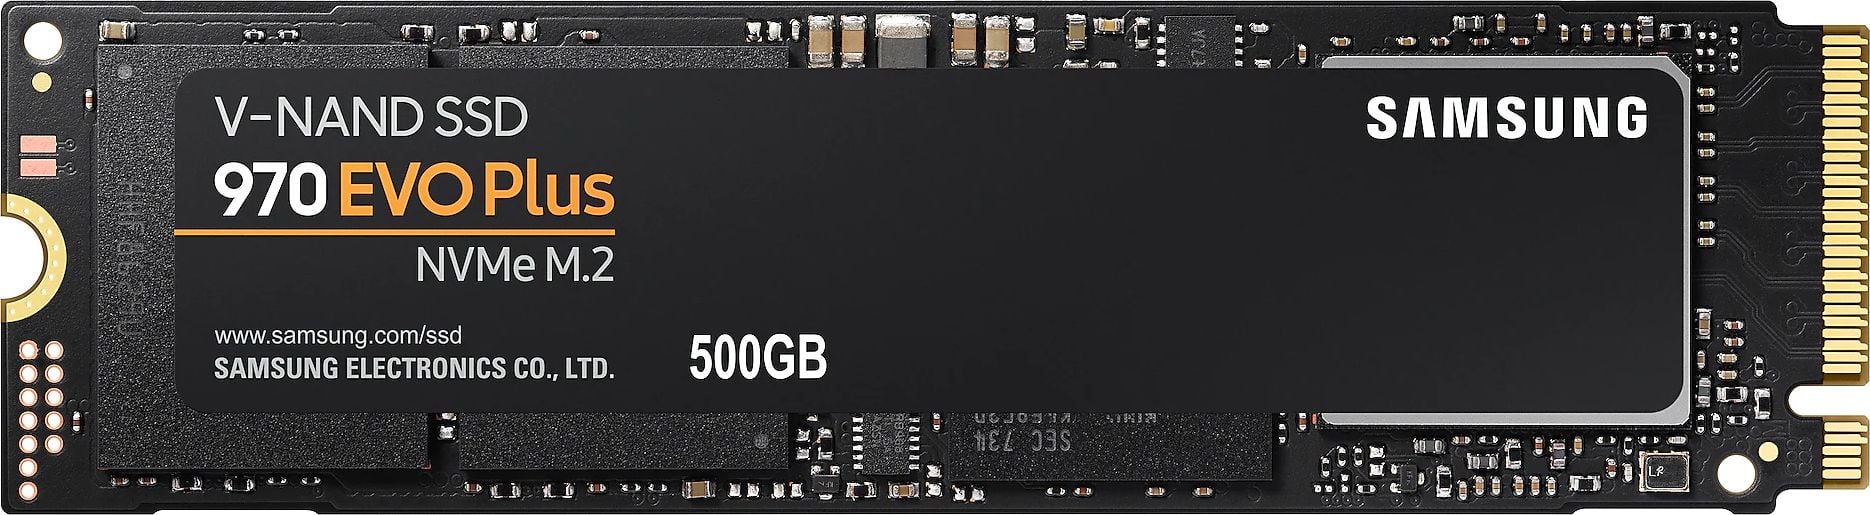 Solid state drive SSD Samsung 970 EVO Plus, 500GB, NVMe, M.2.